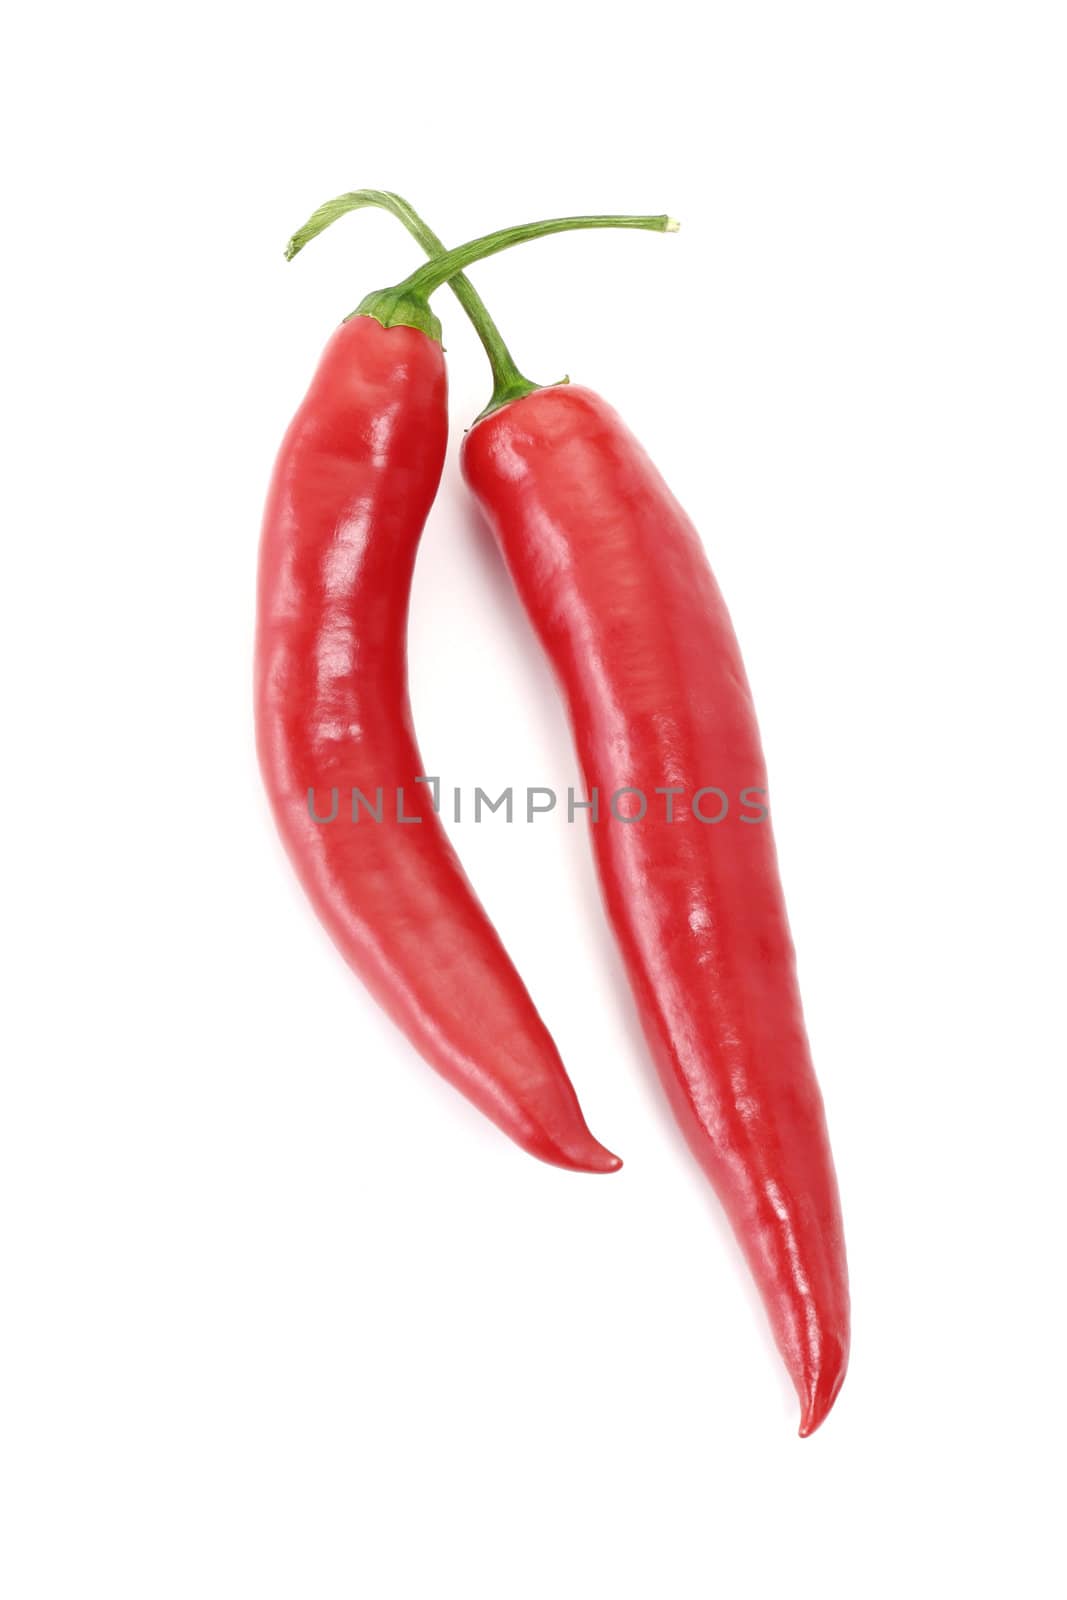 Red hot chili pepper on white by igor_stramyk